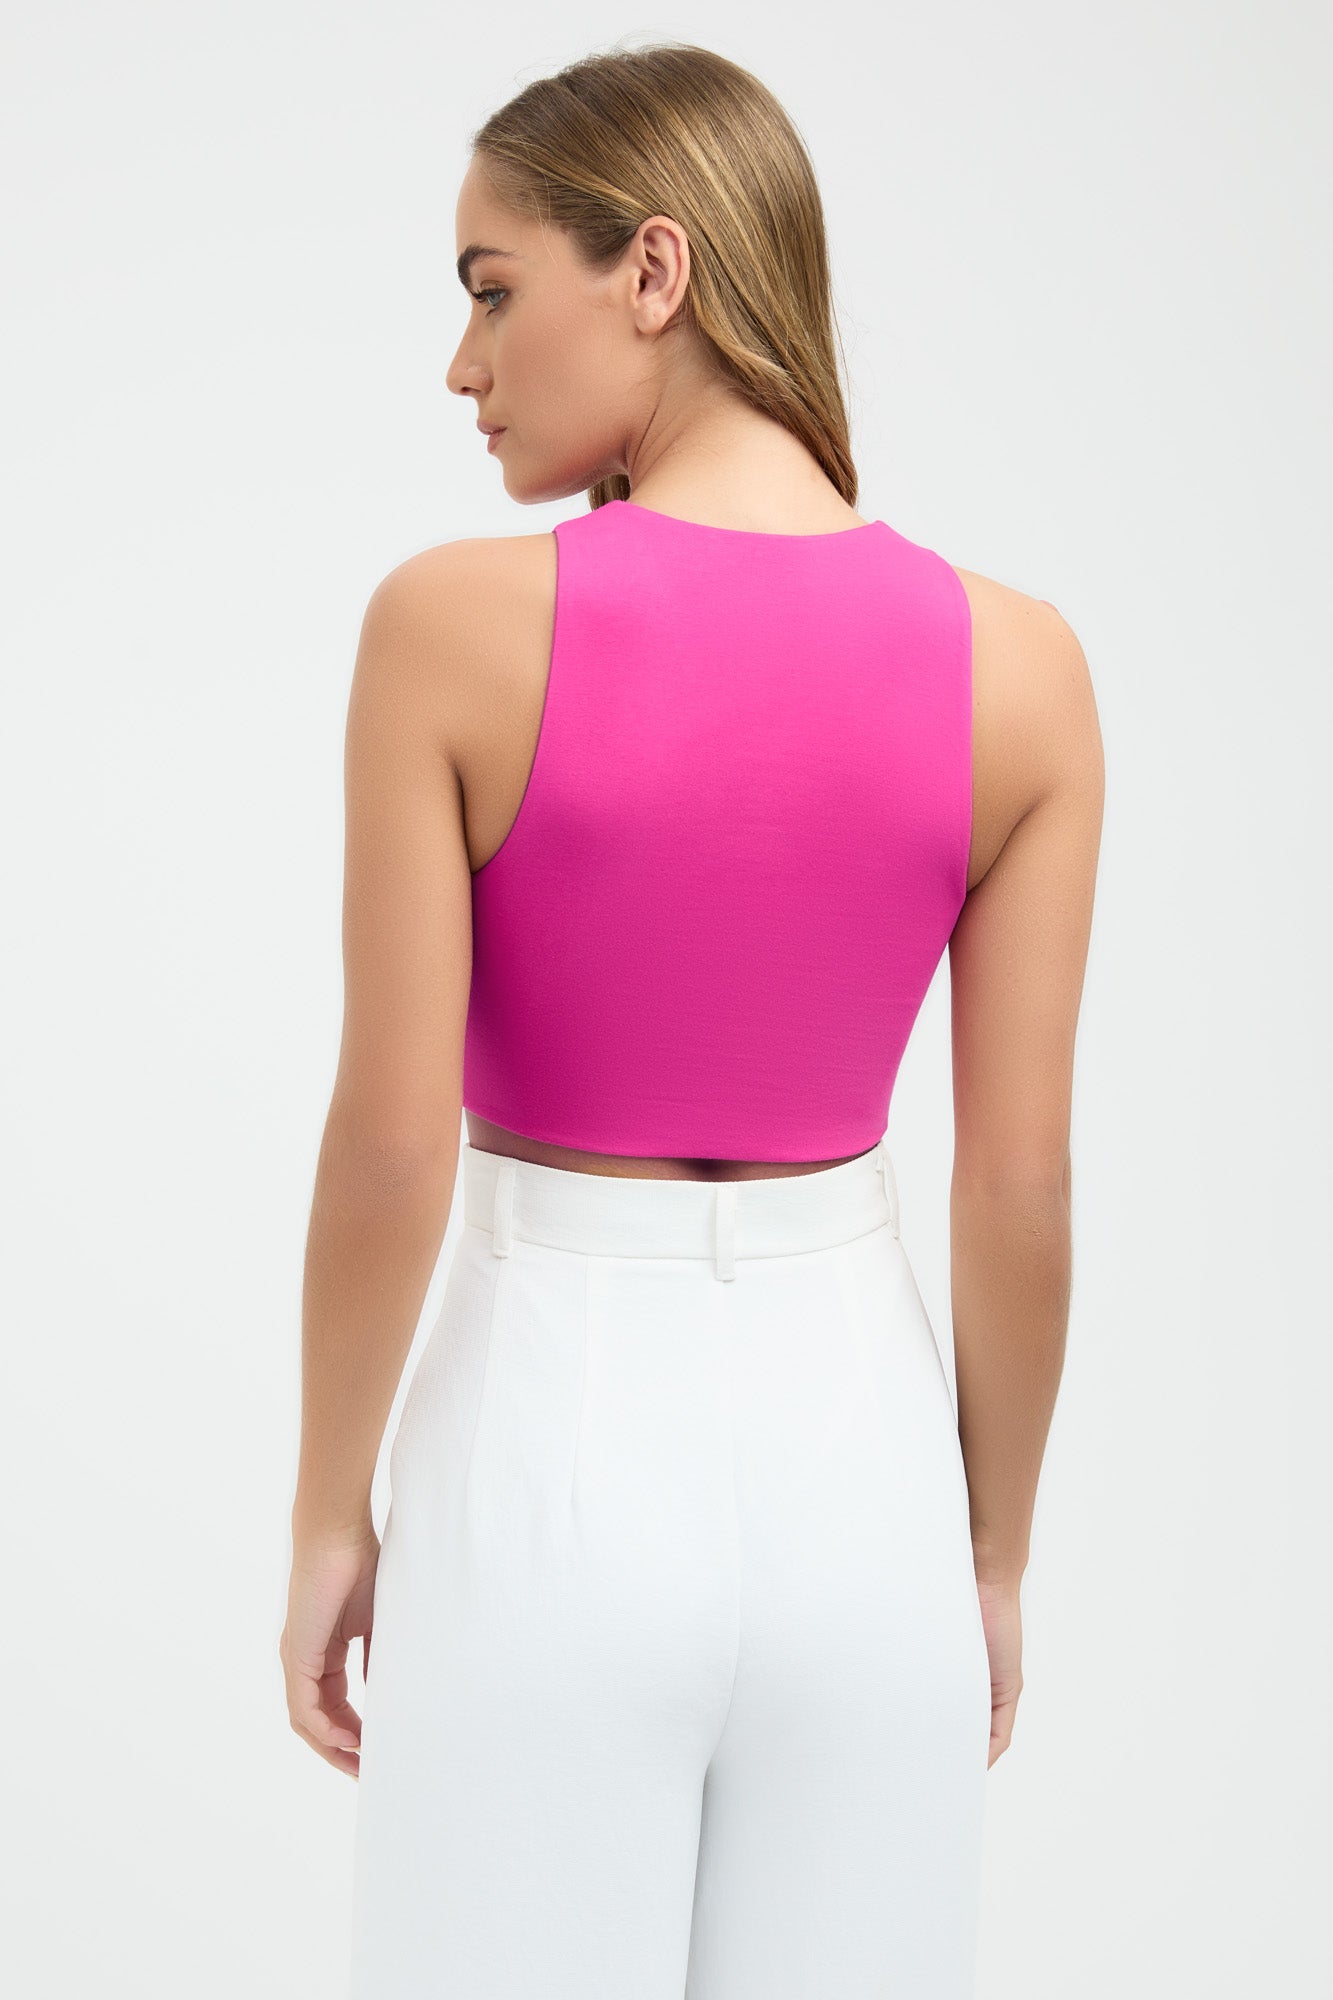 Kookai Pink Cropped Top 6 - Reluv Clothing Australia